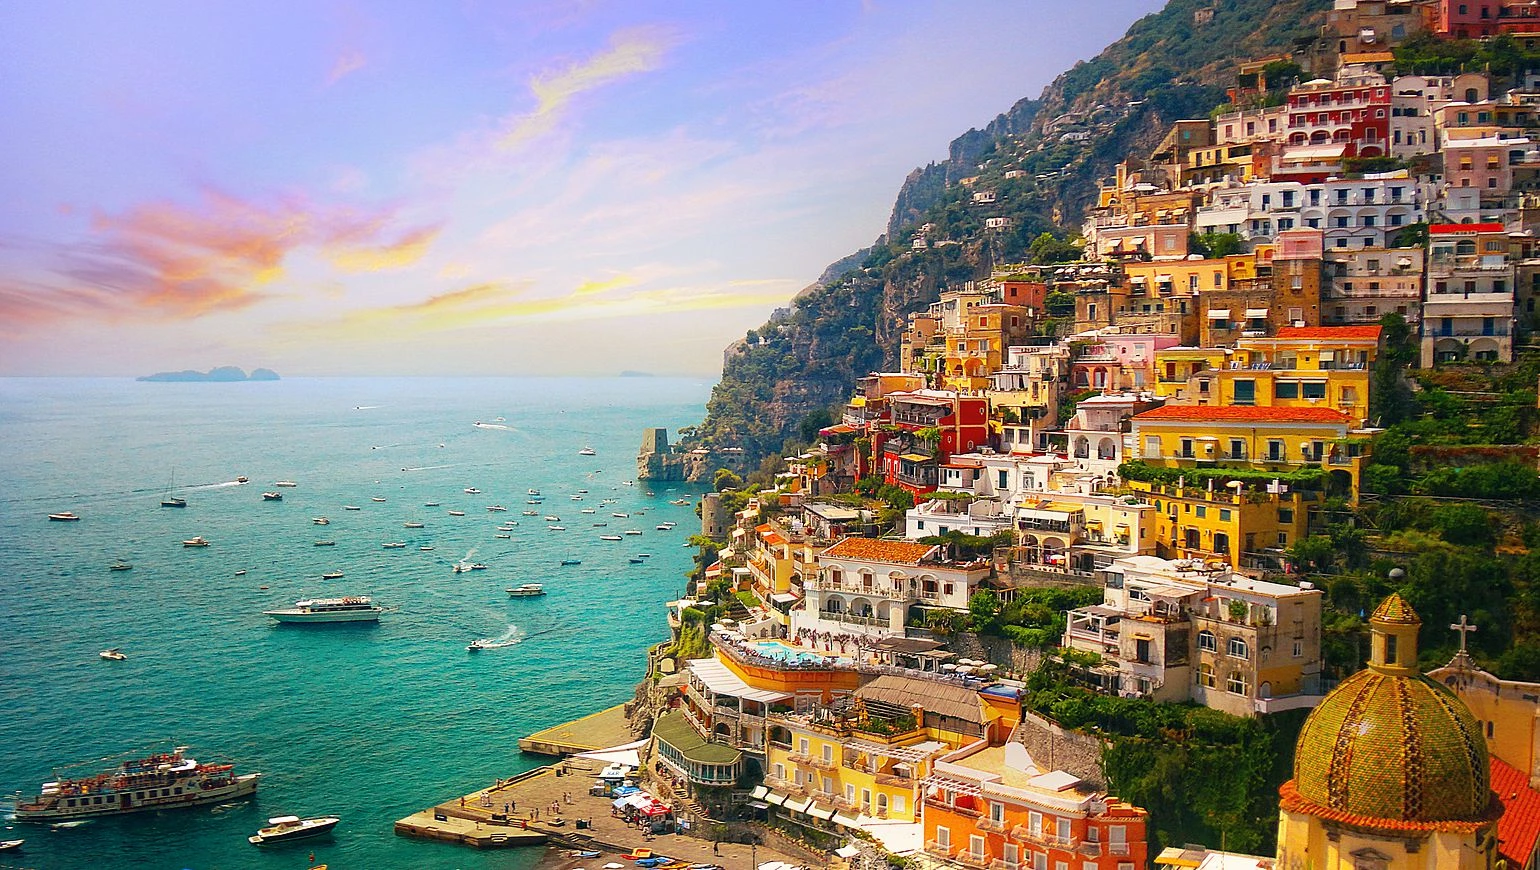 Descubre la deslumbrante Costa Amalfitana en Italia